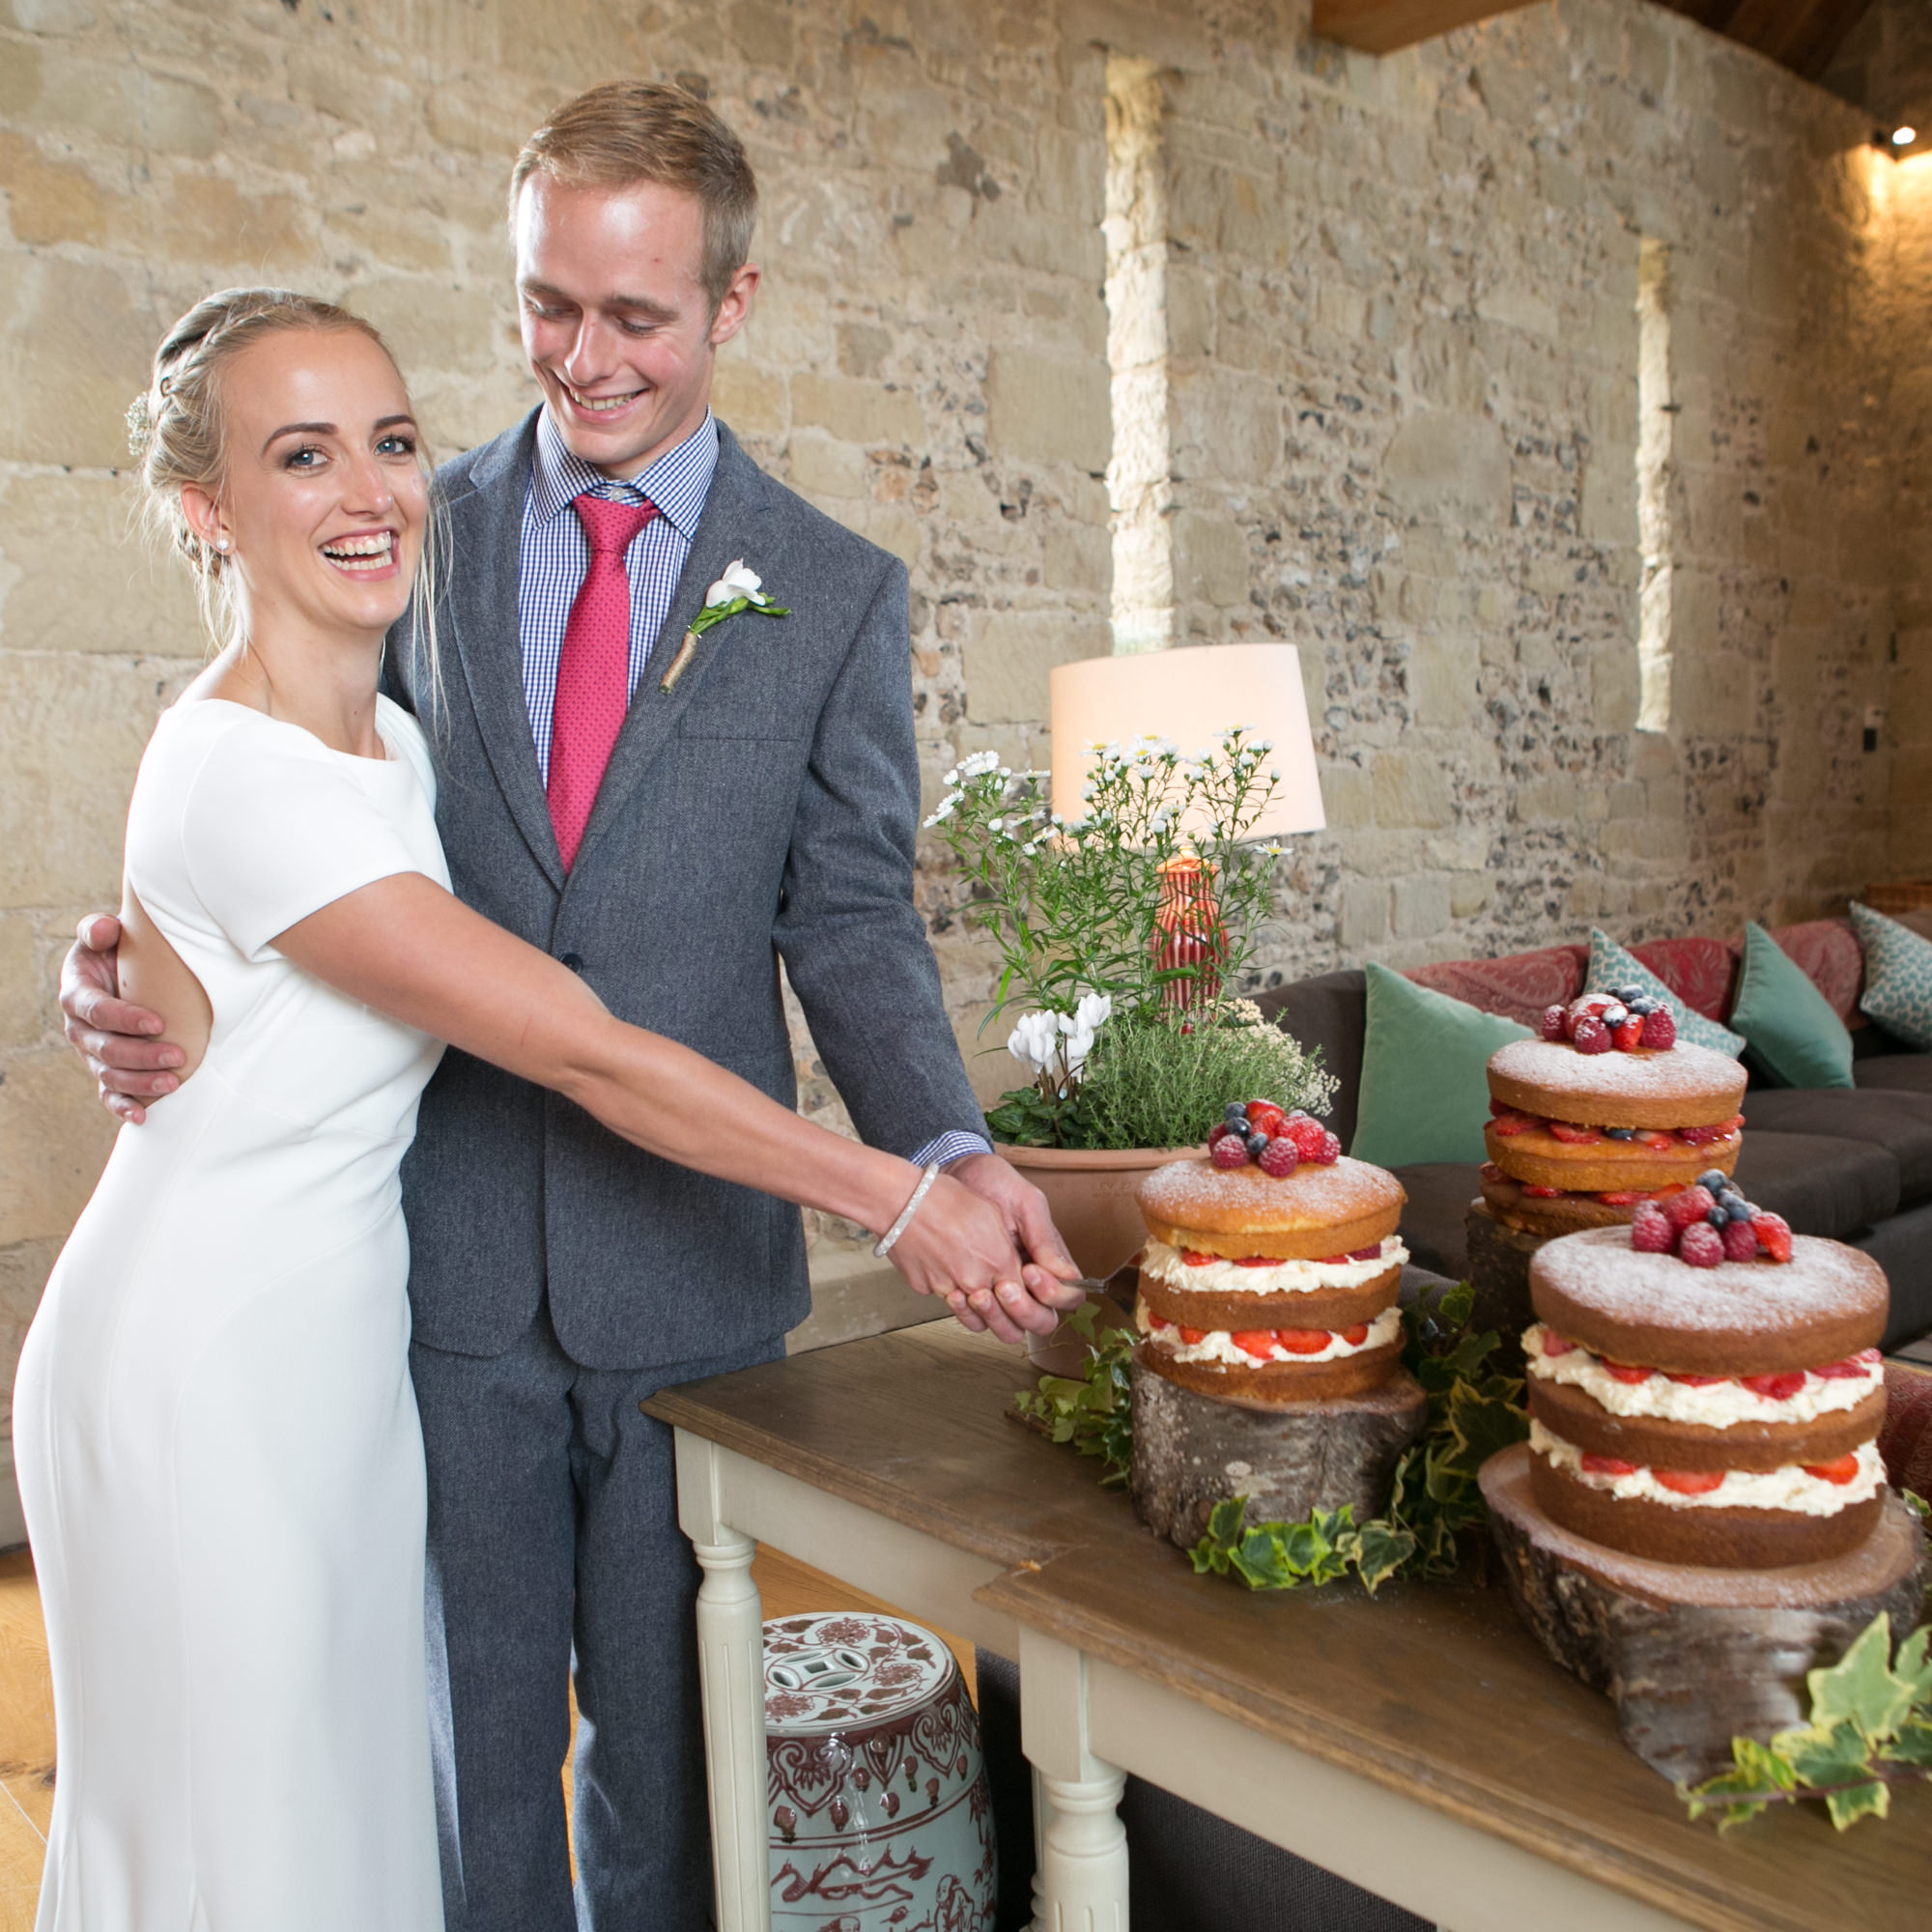 Barn Wedding | Devon Wedding Photographer, The Bake Barn Wiltshire, the Bake Barn Wedding Photographer, wedding cake, cake cutting